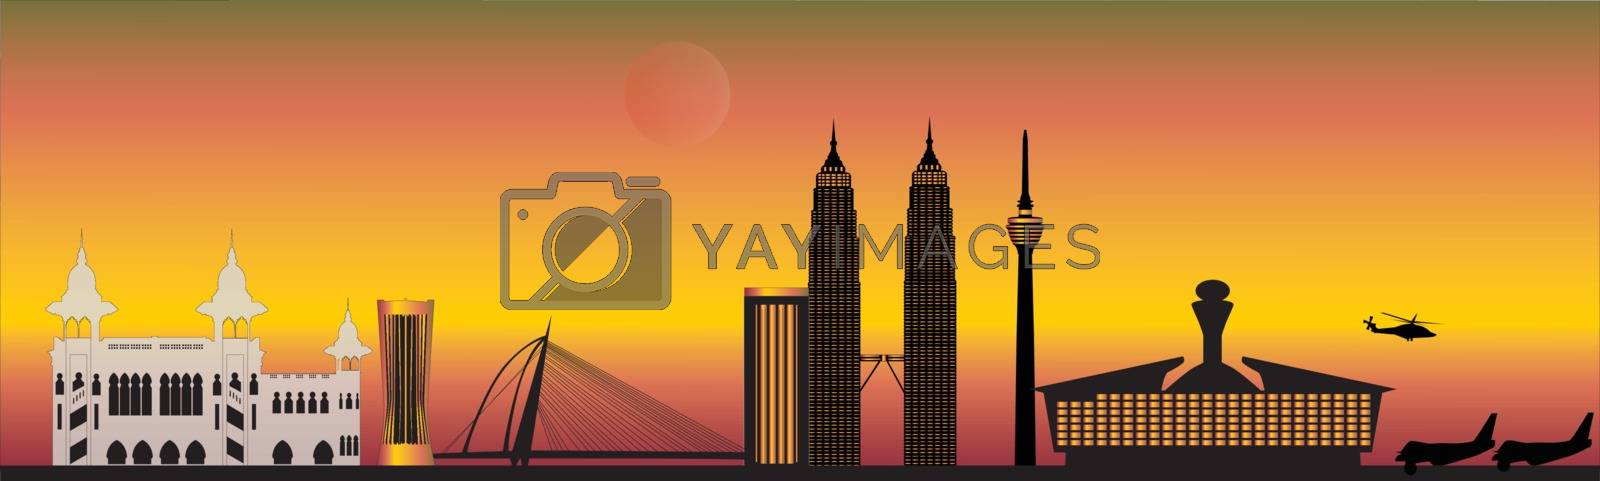 Royalty free image of kuala lumpur capital city malaysia city skyline by compuinfoto